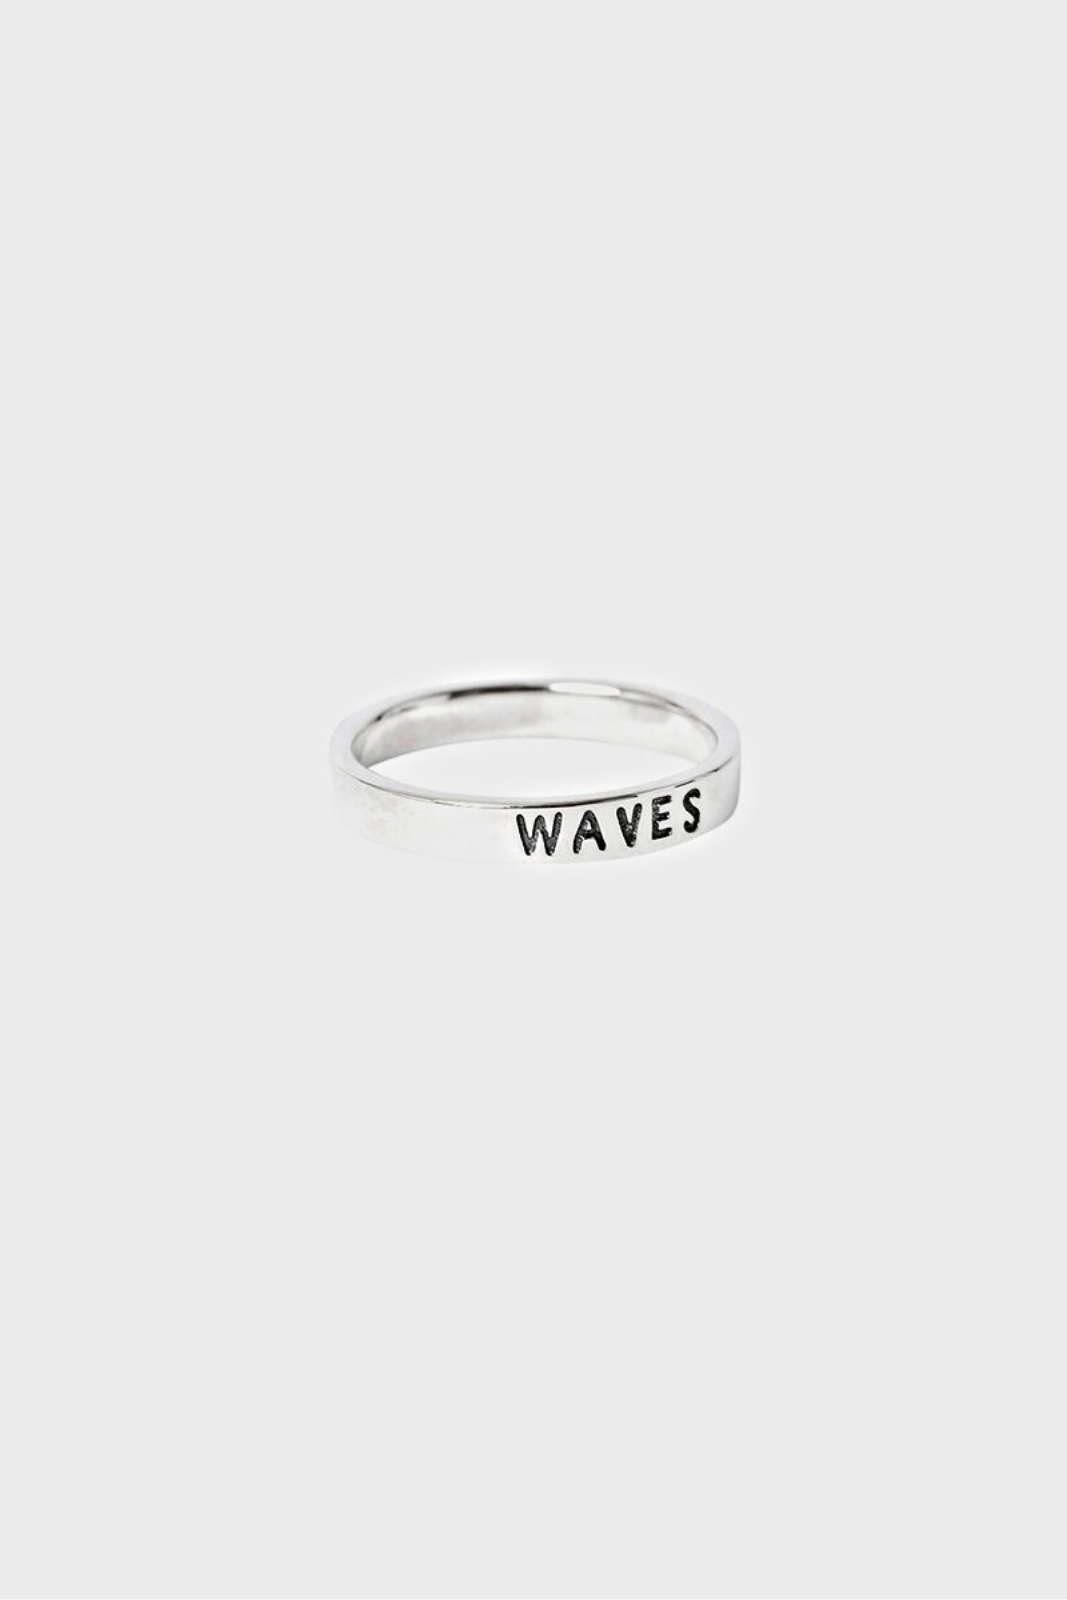 Waves Ring